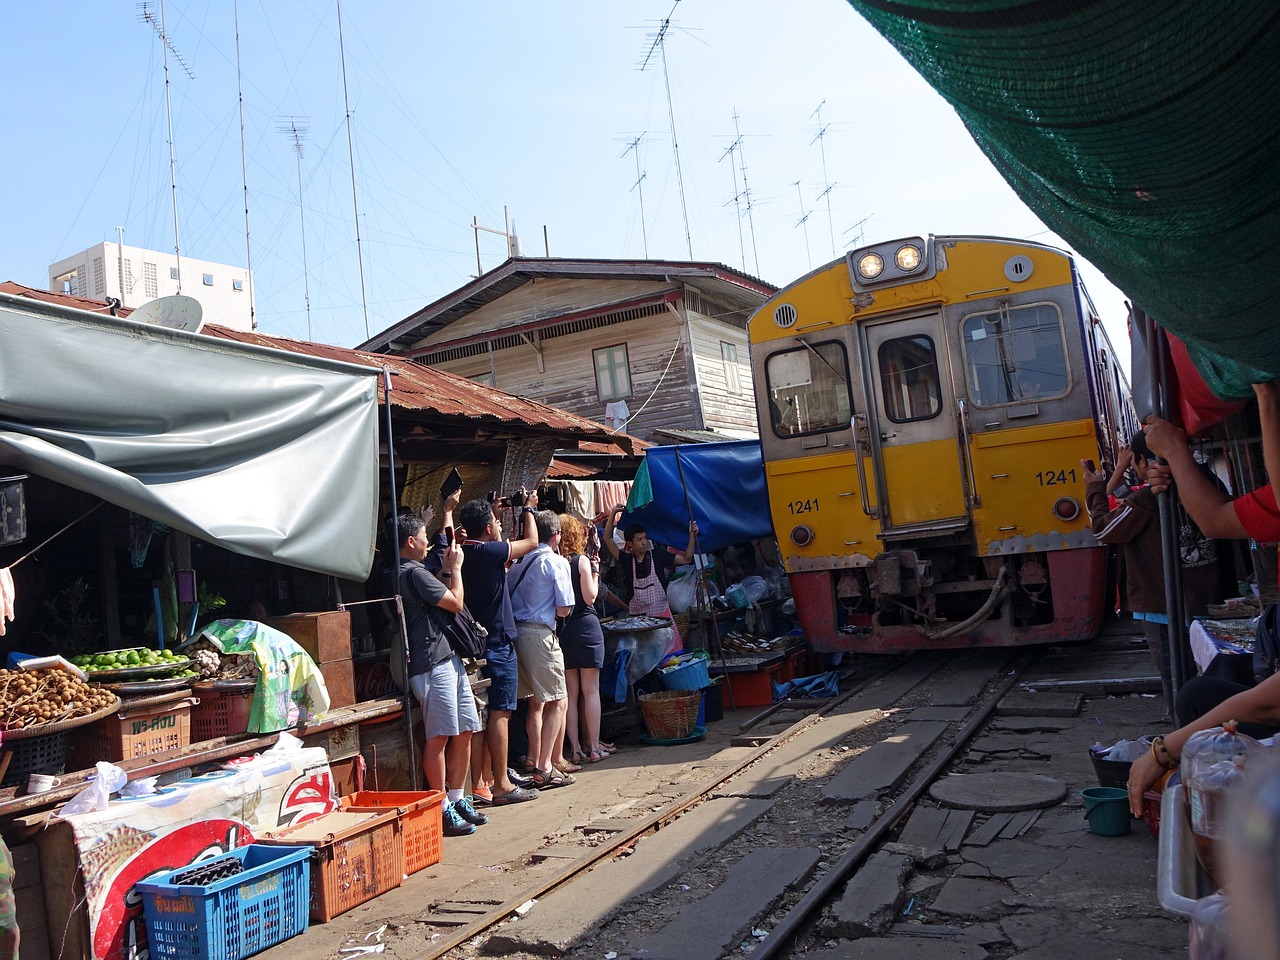 Rom Hoop Market (Maeklong Railway Market). Image by Jason Goh from Pixabay